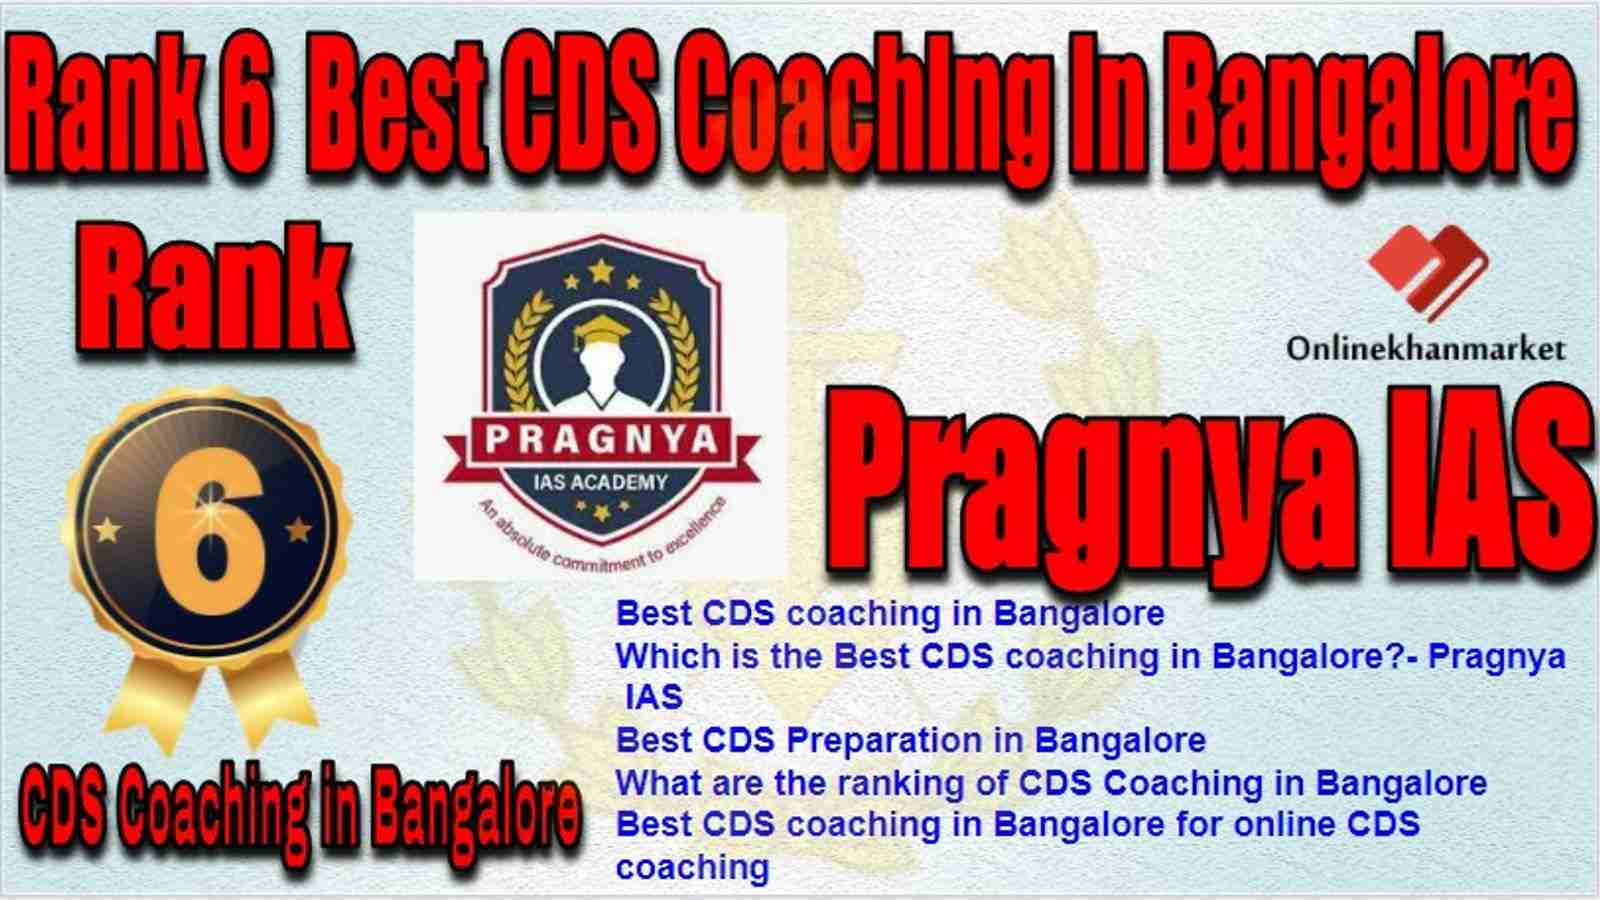 Rank 6 Best CDS Coaching in bangalore